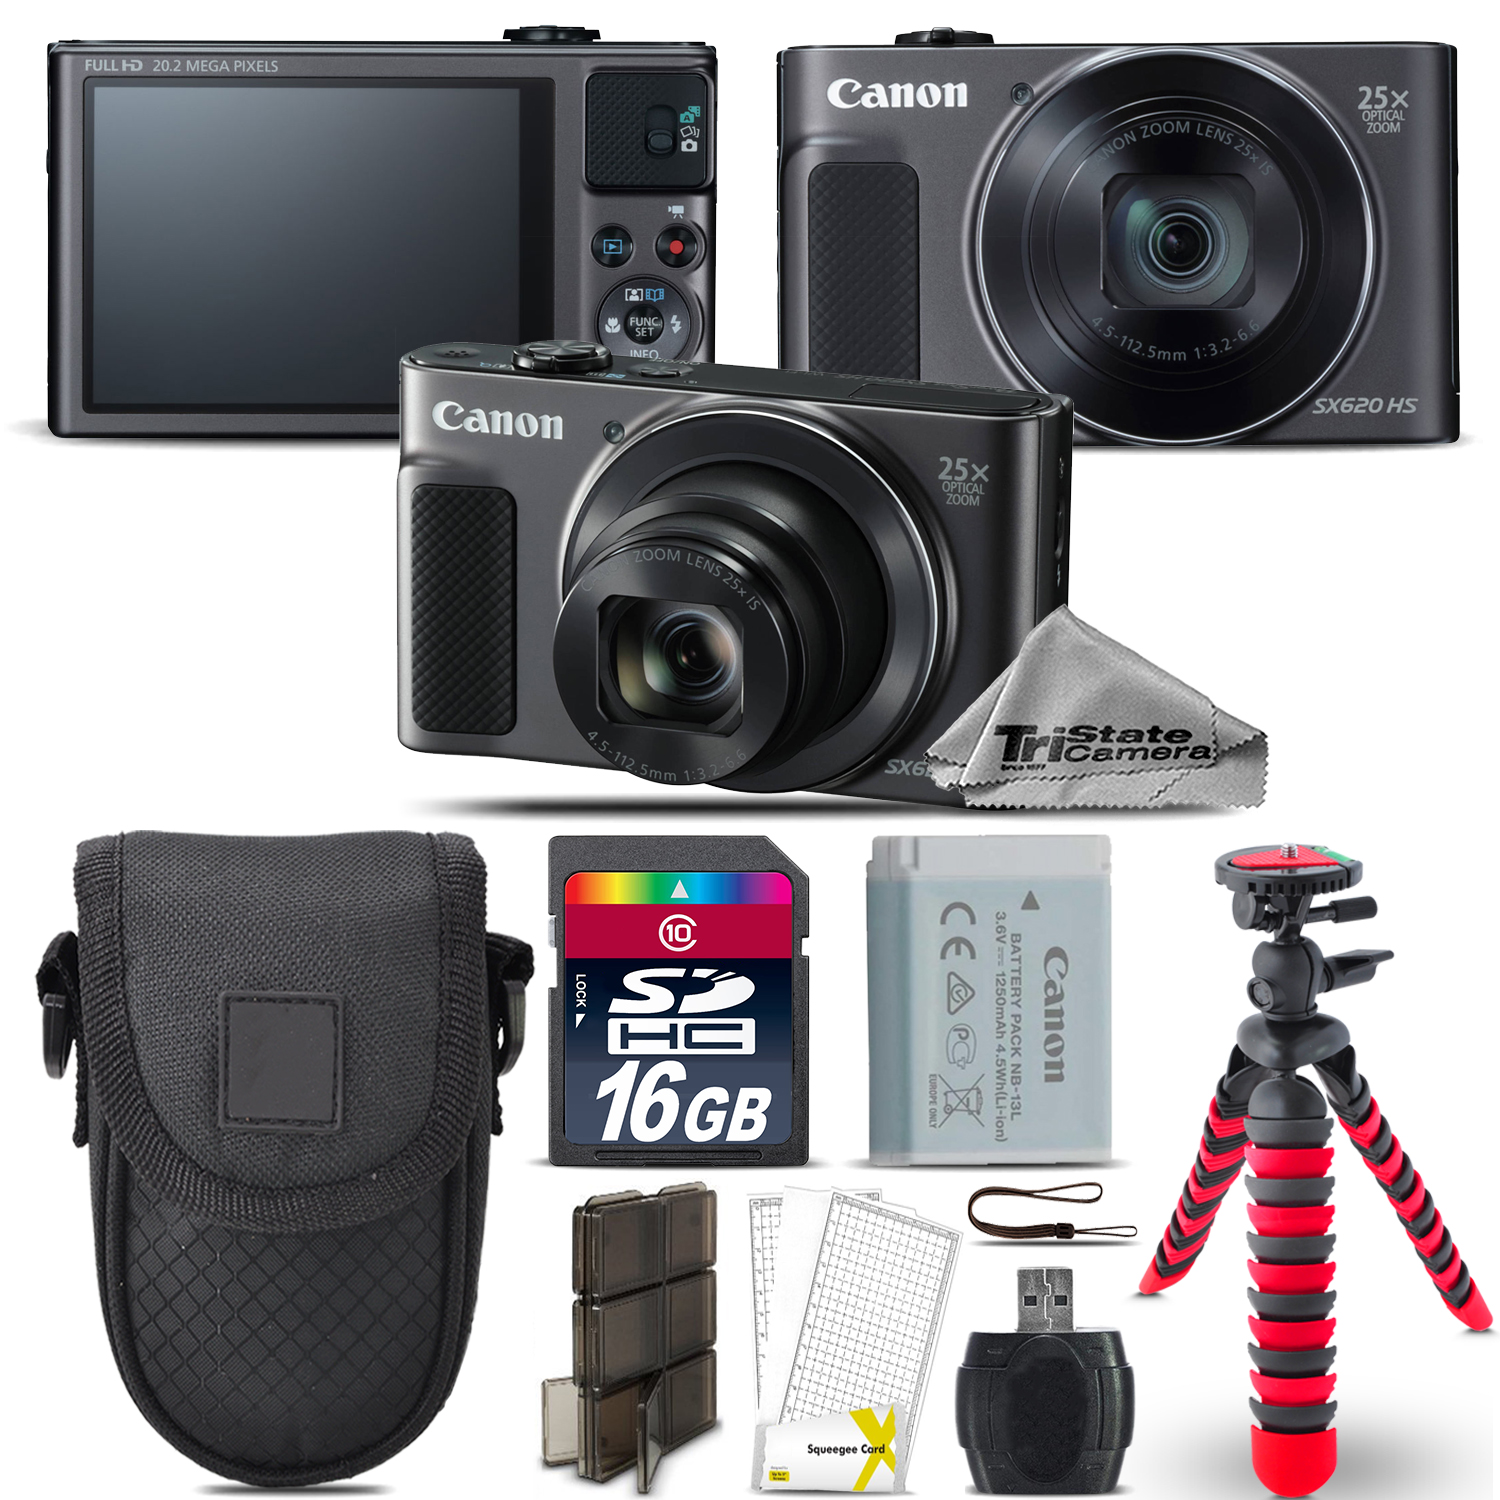 PowerShot SX620 HS Digital Camera Black + Spider Tripod + Case - 16GB Kit *FREE SHIPPING*